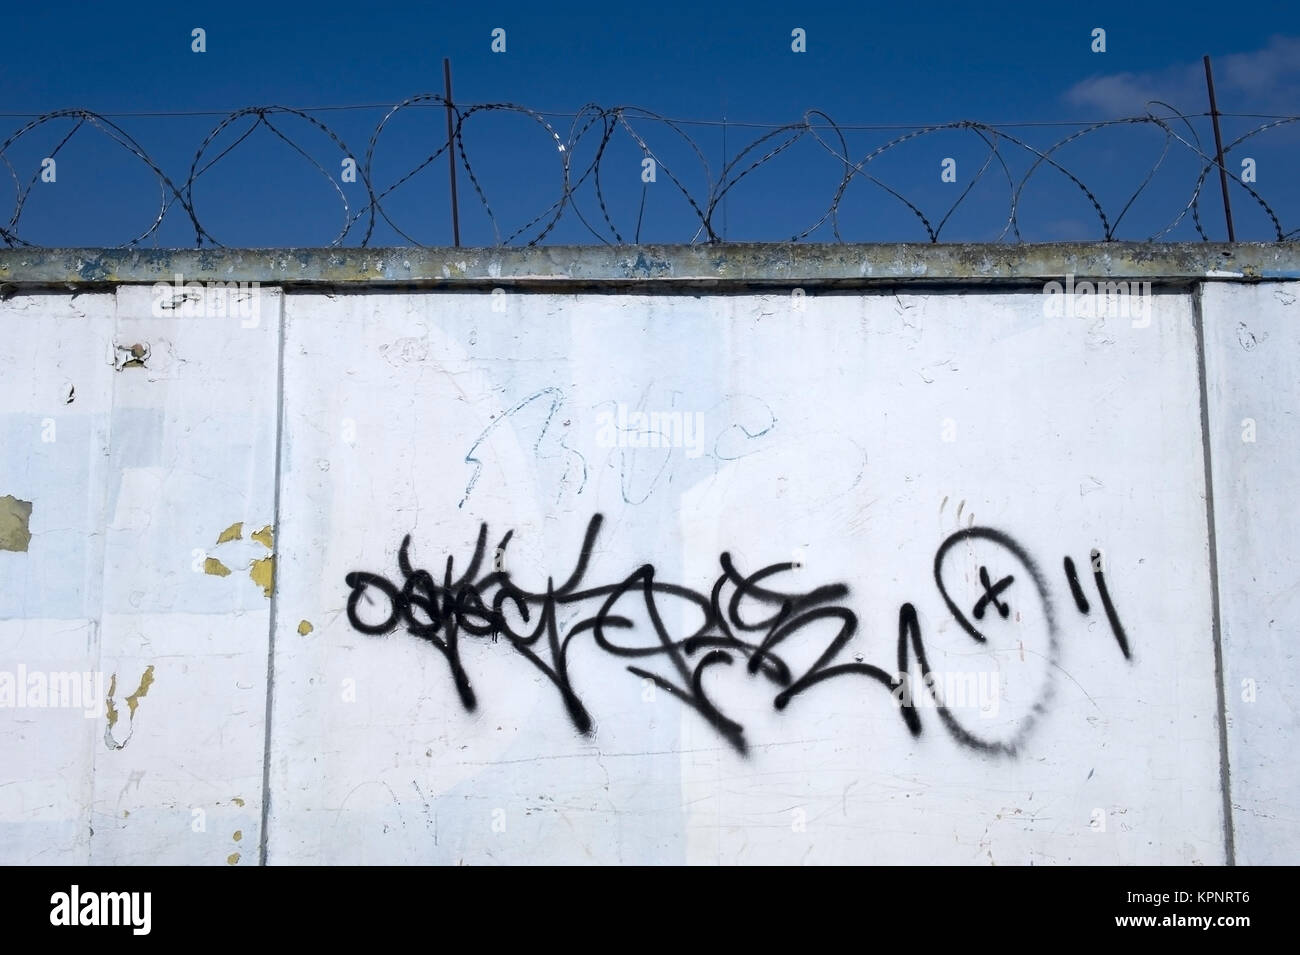 Graffiti und Stacheldraht an einer Mauer - graffiti and barbwire on a wall Stock Photo